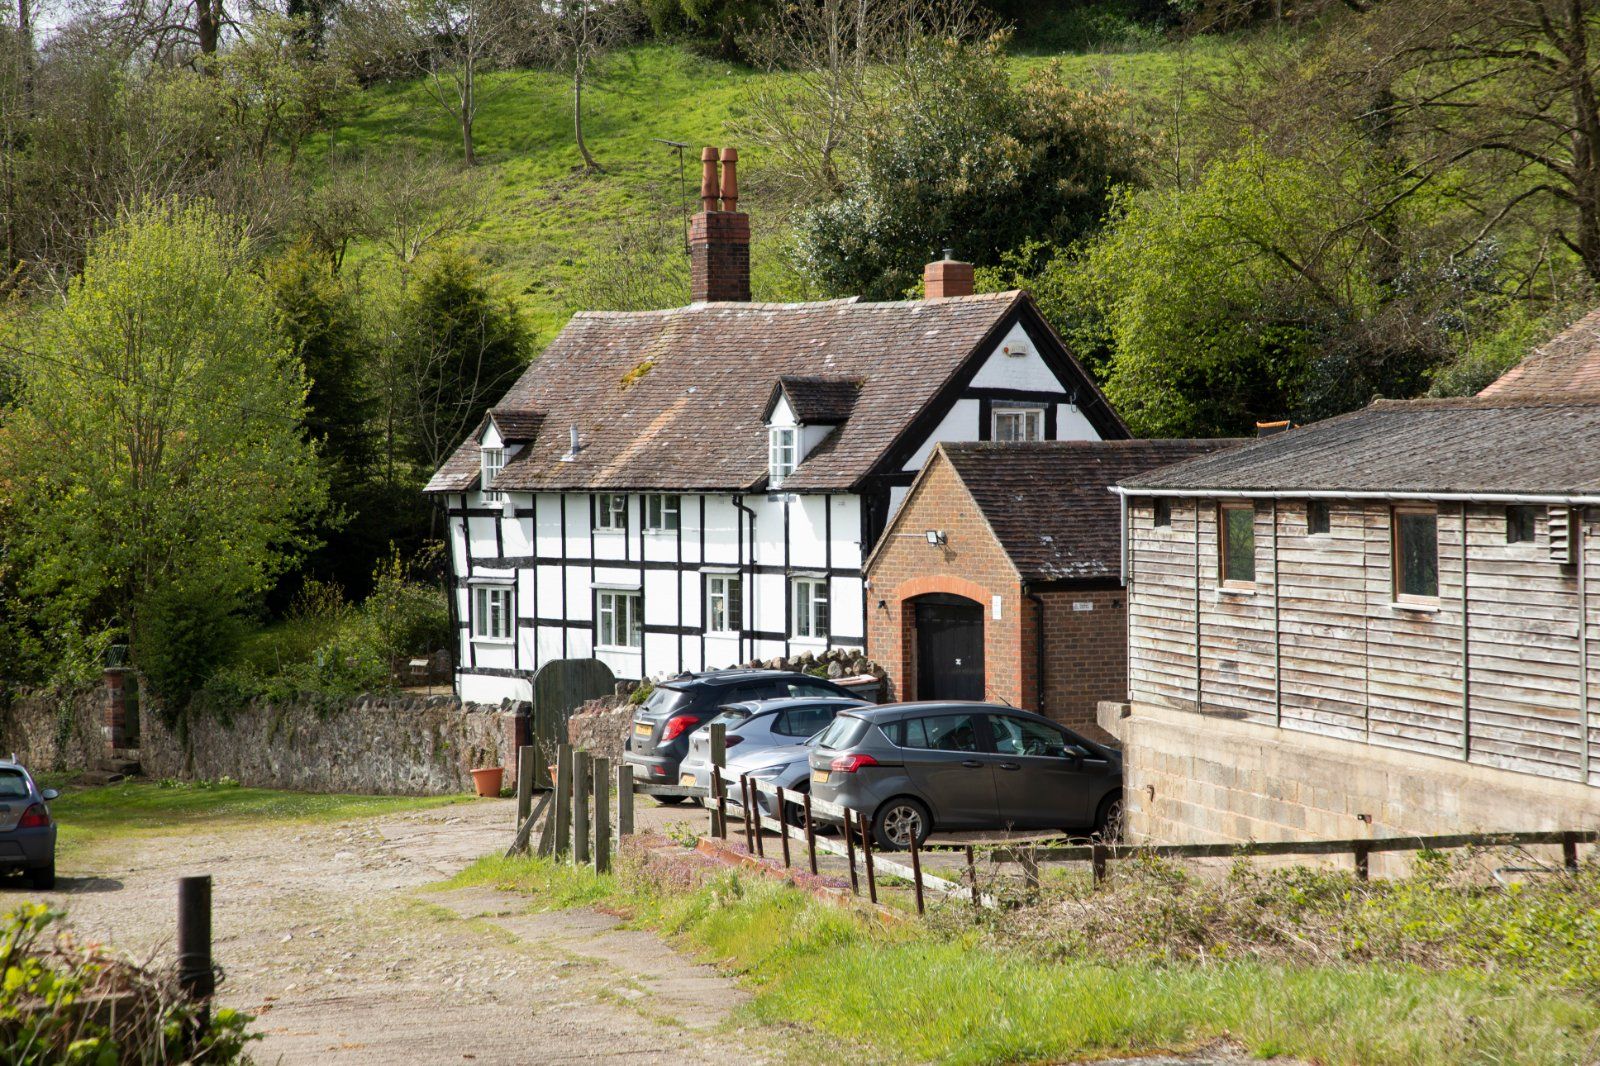 Underhills Farmhouse